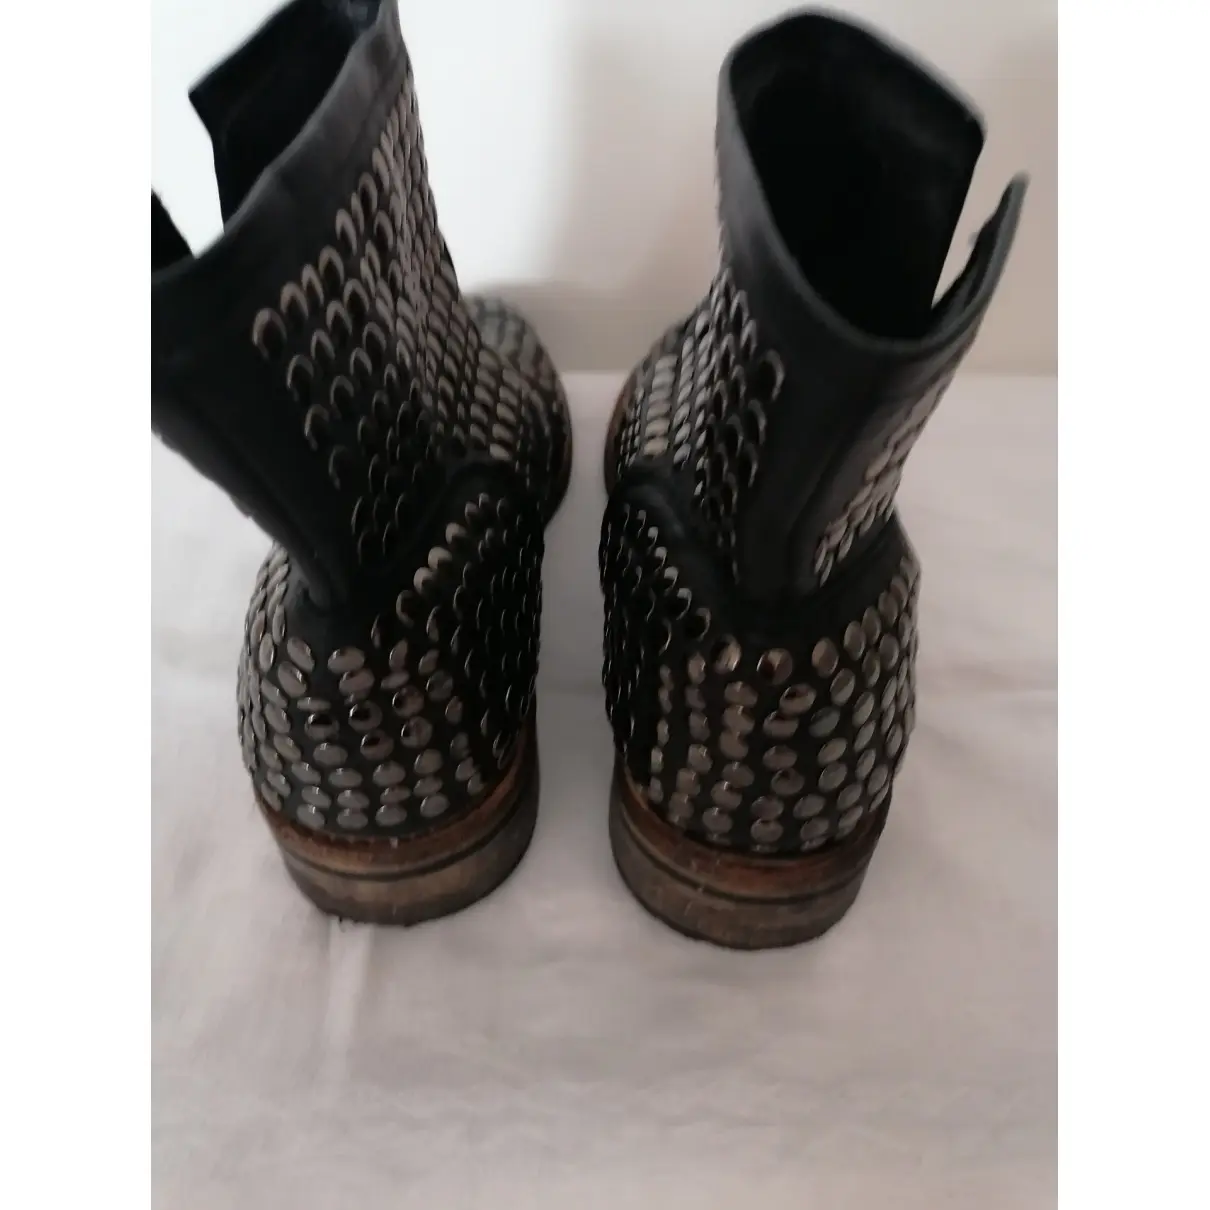 Leather ankle boots Chiarini Bologna